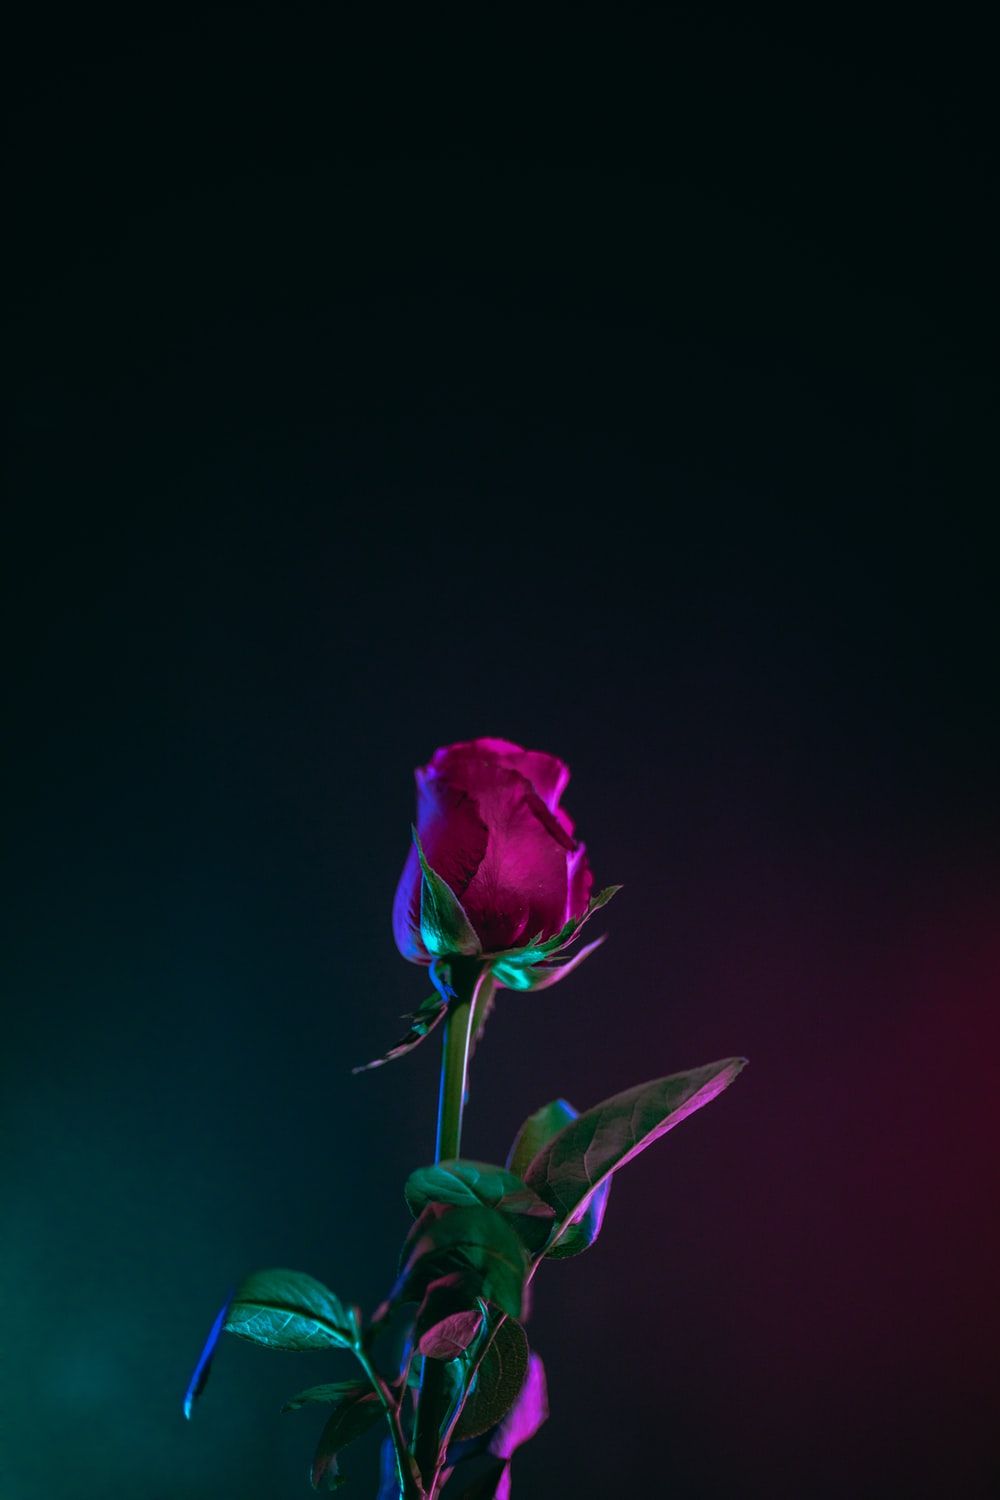 red rose flower photo in dark surface photo